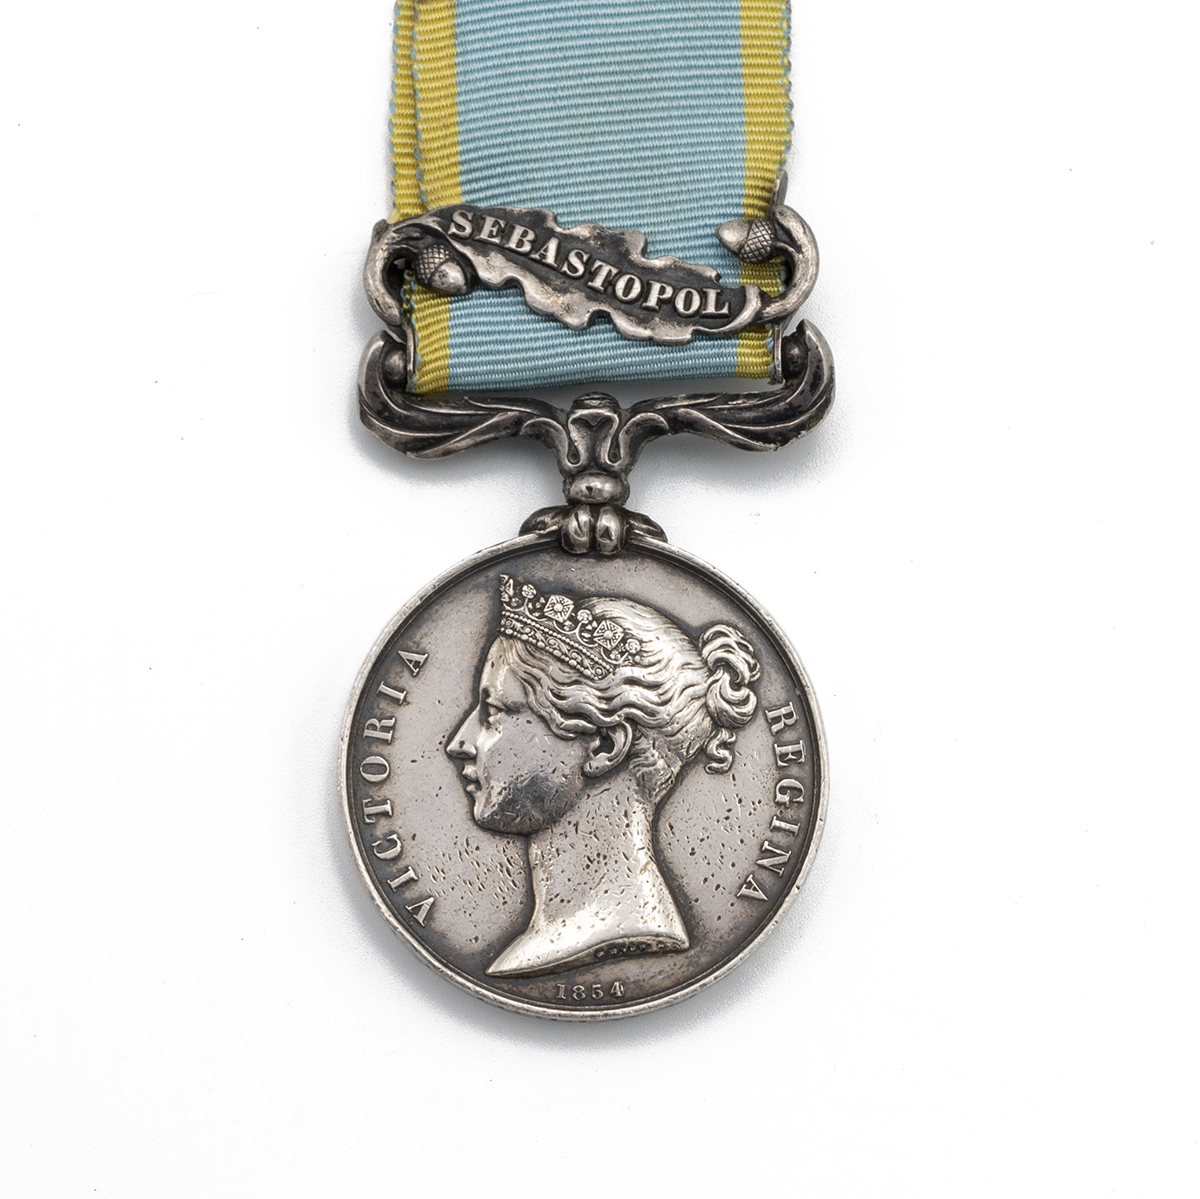 Crimea Medal with the clasp 'Sebastopol' of Lieutenant Thomas Burchall Hollway of the 21st Regime...